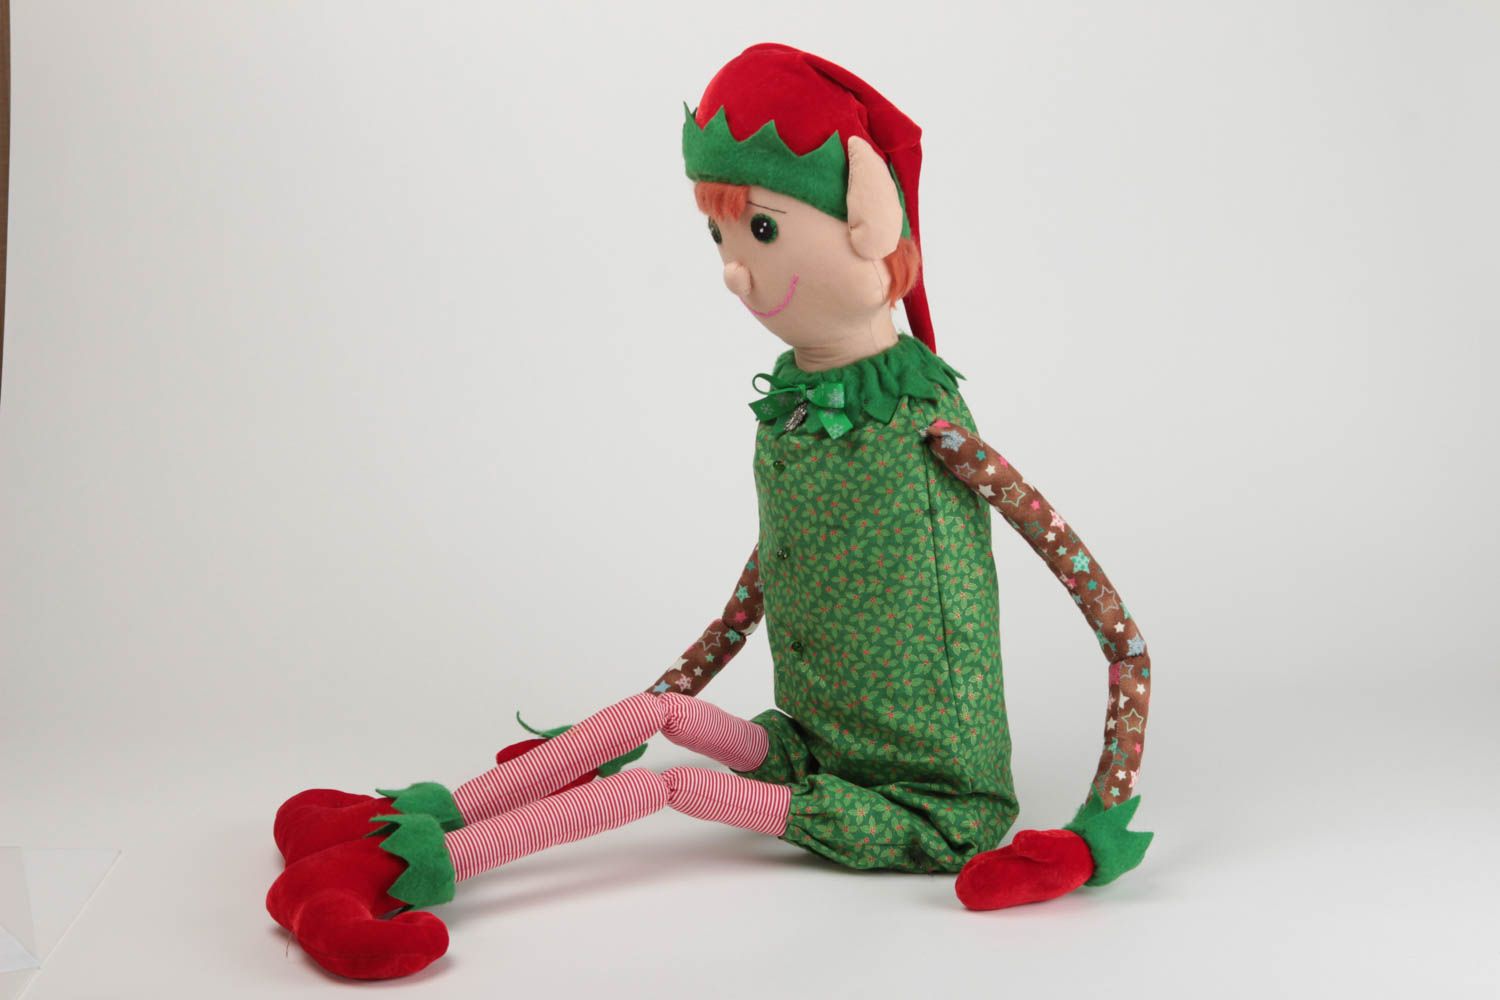 Handmade soft toy interior rag doll interior decorating gift ideas for kids photo 4